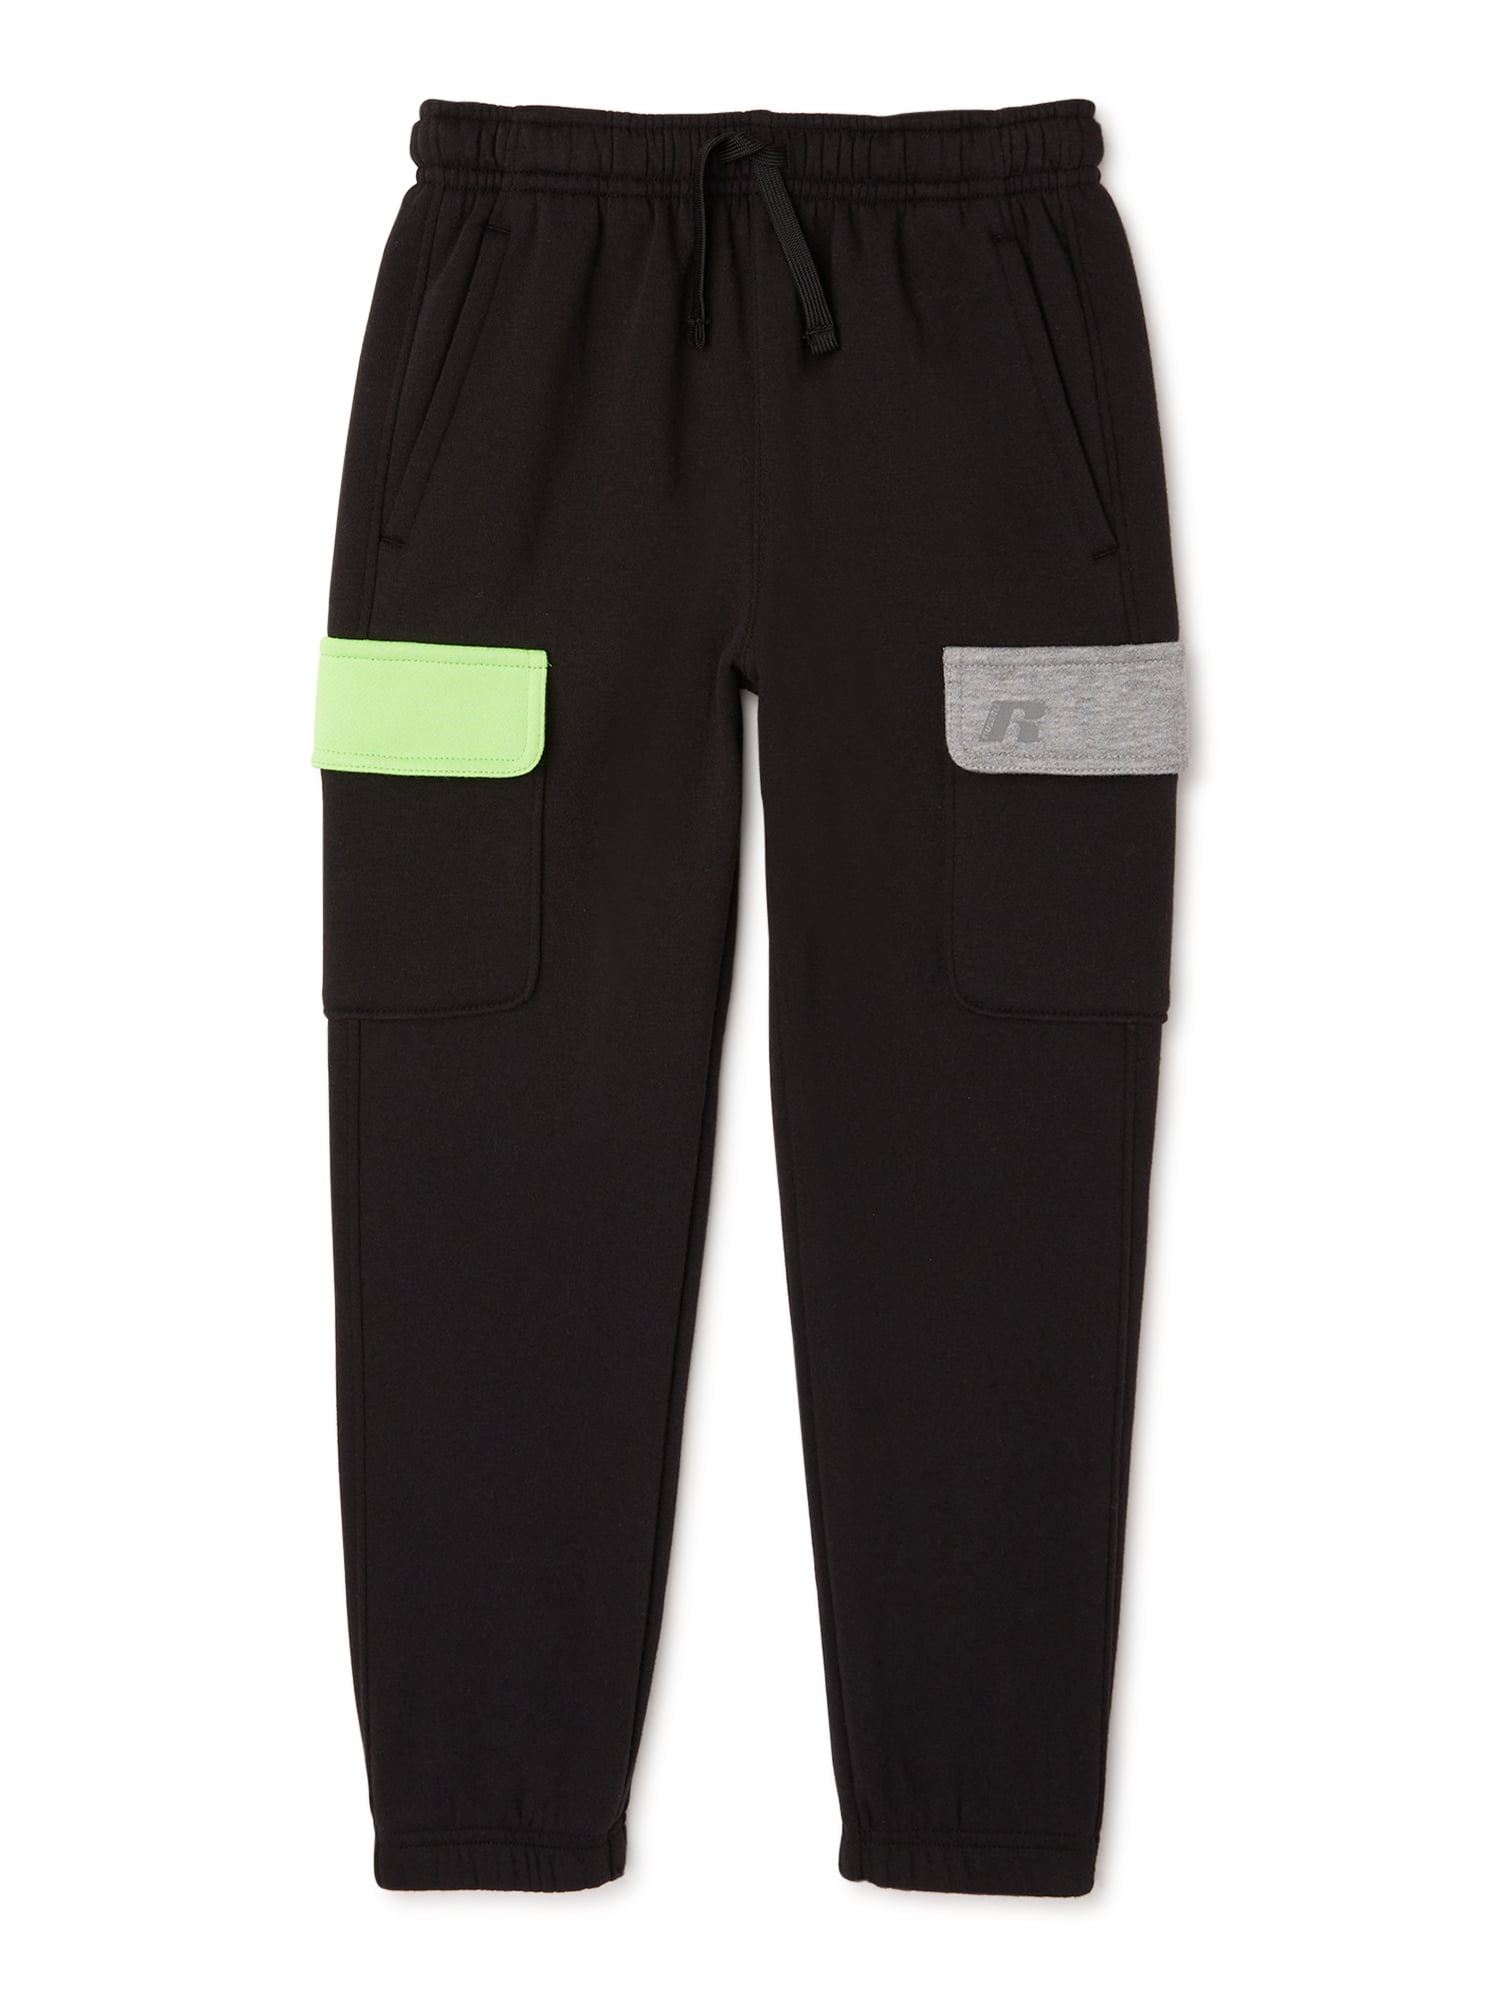 Russell Boys Athletic Cargo Pants, Sizes 4-18 & Husky - Walmart.com